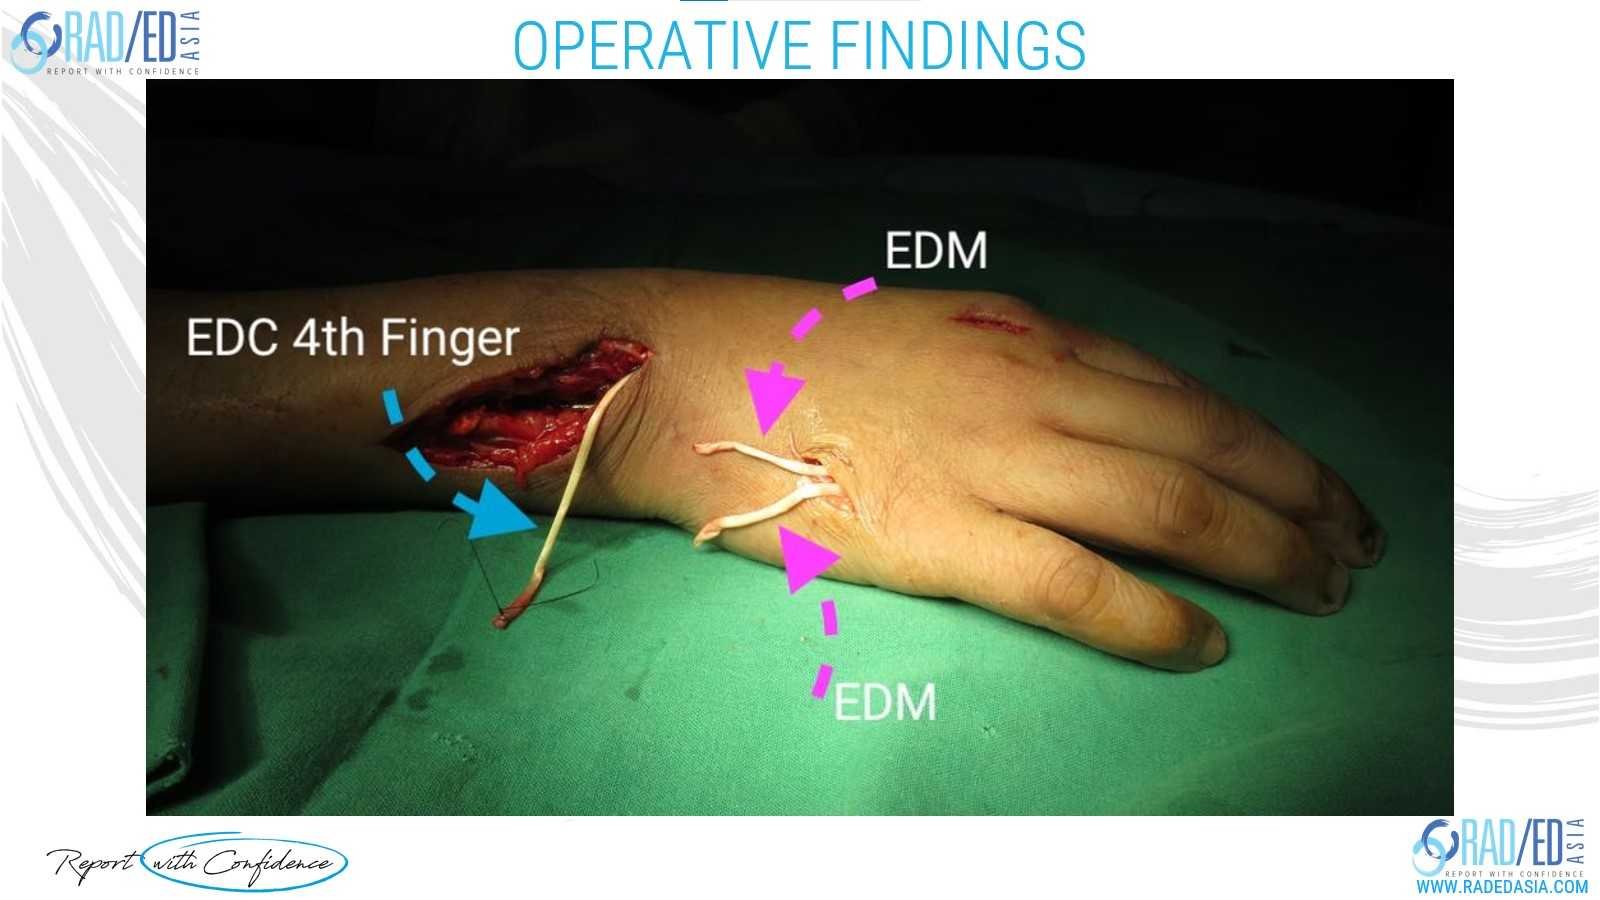 wrist rheumatoid arthritis Vaughn Jackson Syndrome finger operative findings radedasia